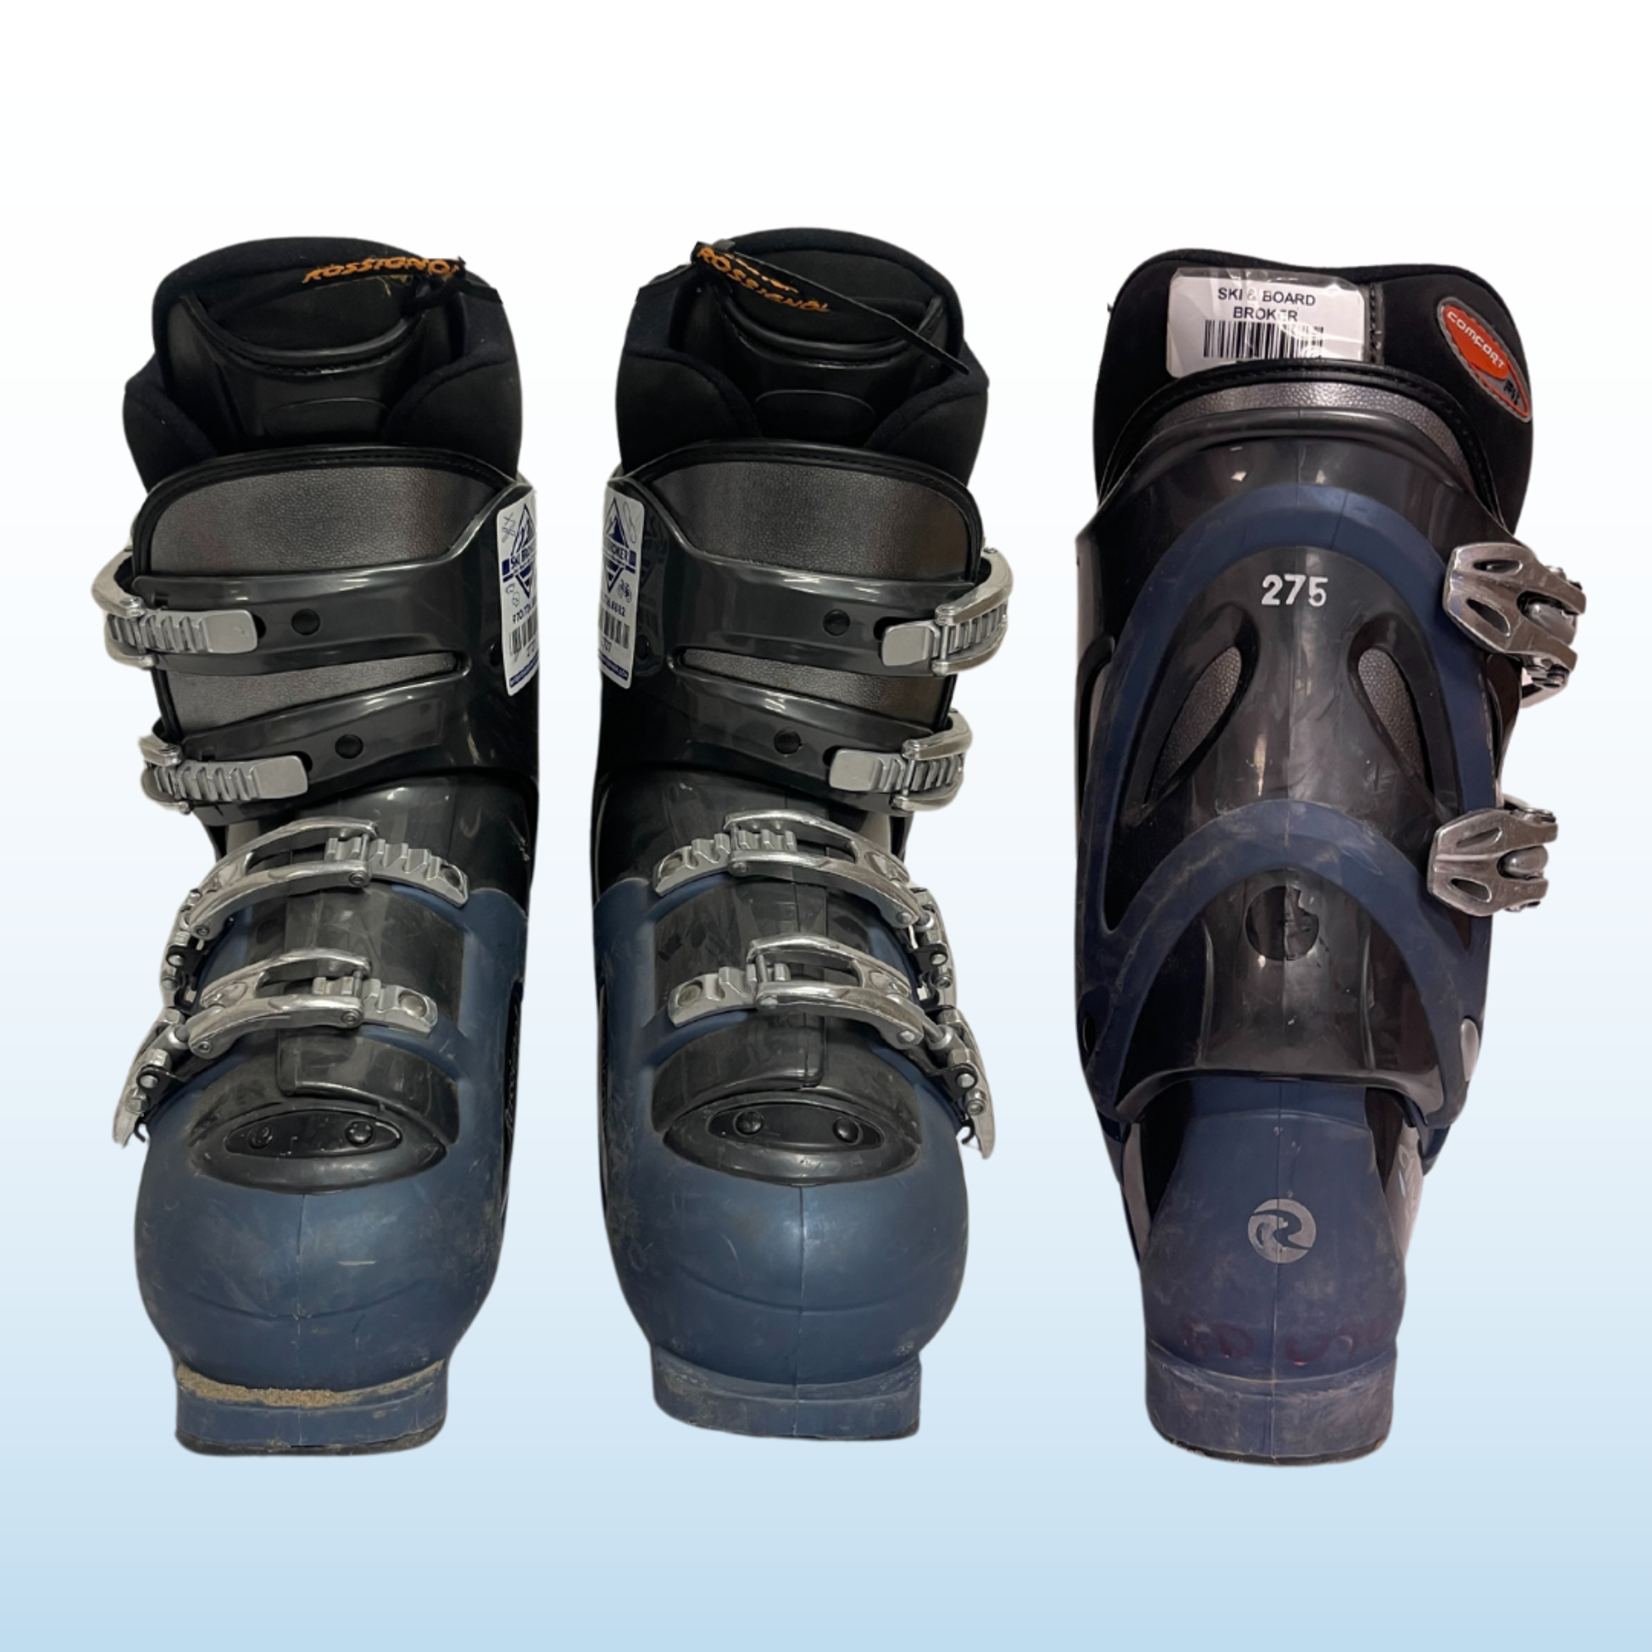 Rossignol Rossignol Diva Ski Boots (Size 27.5)